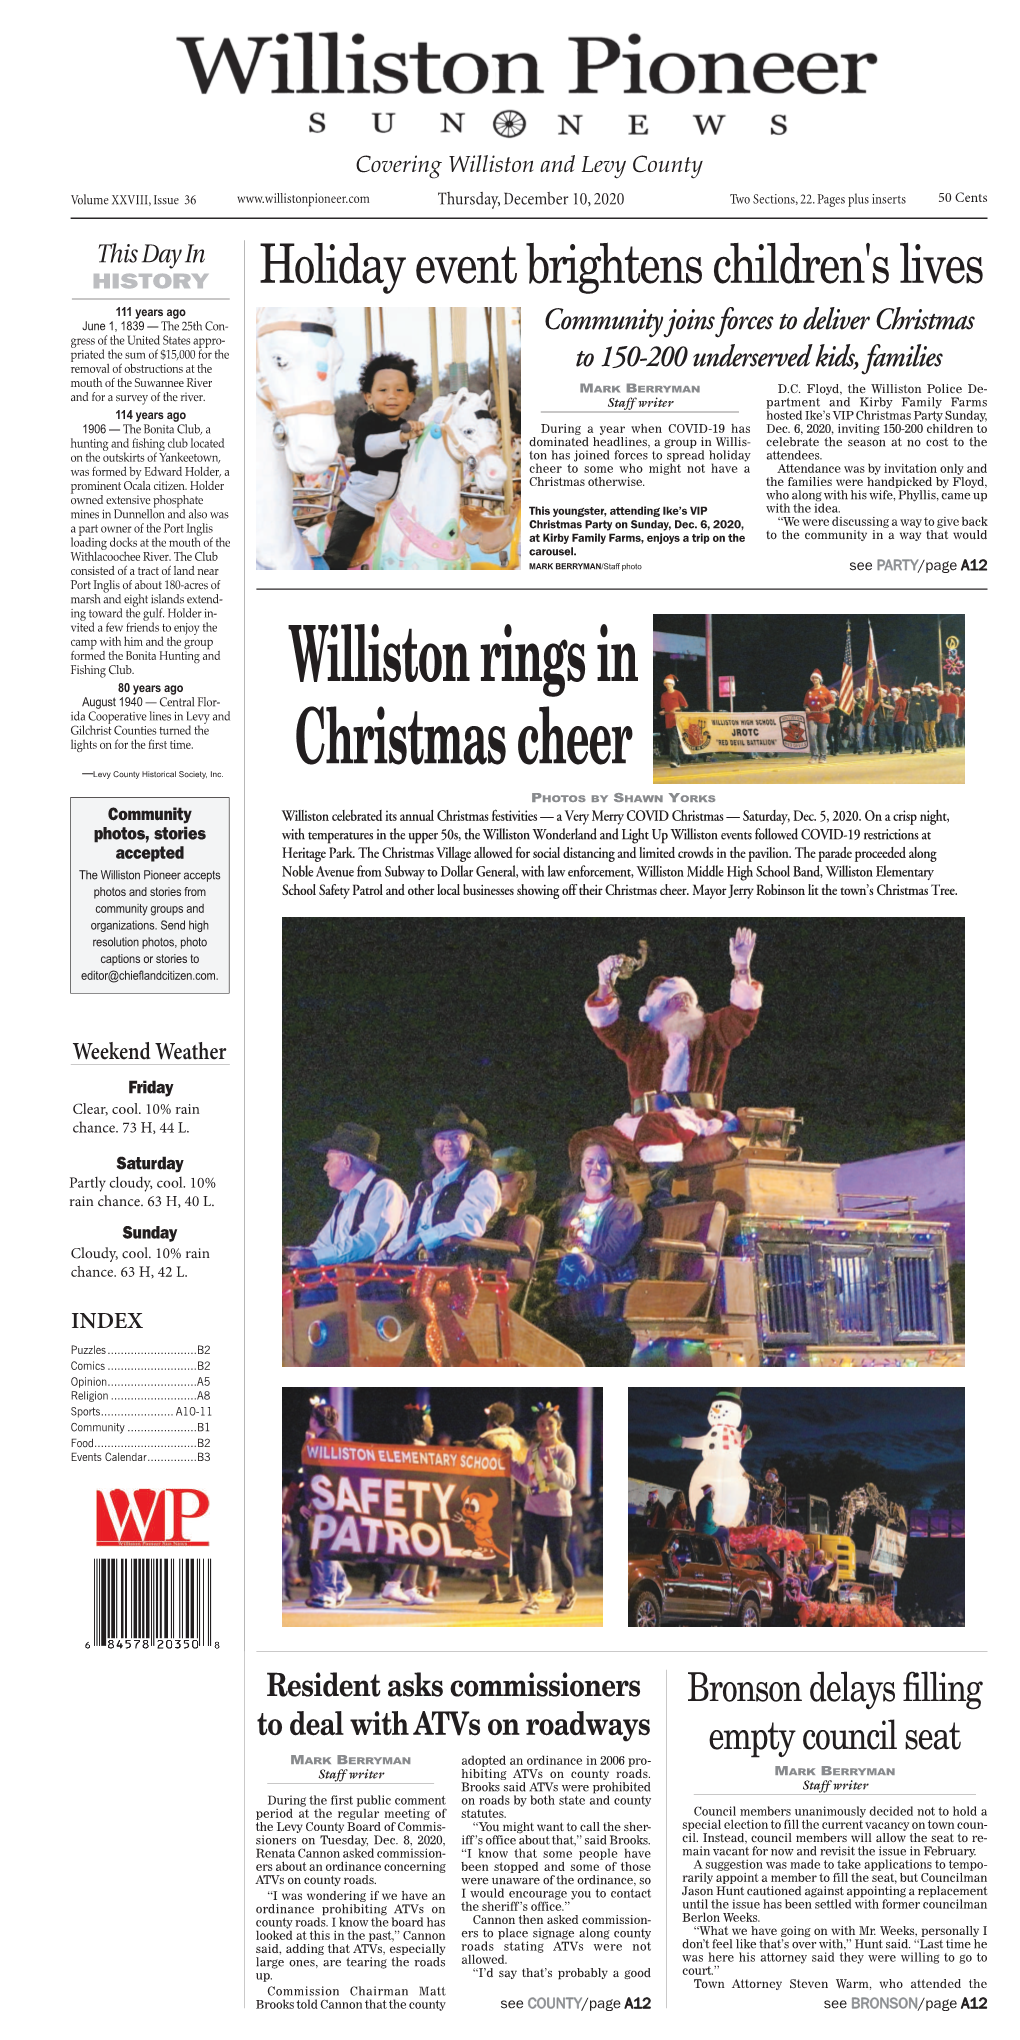 Williston Rings in Christmas Cheer